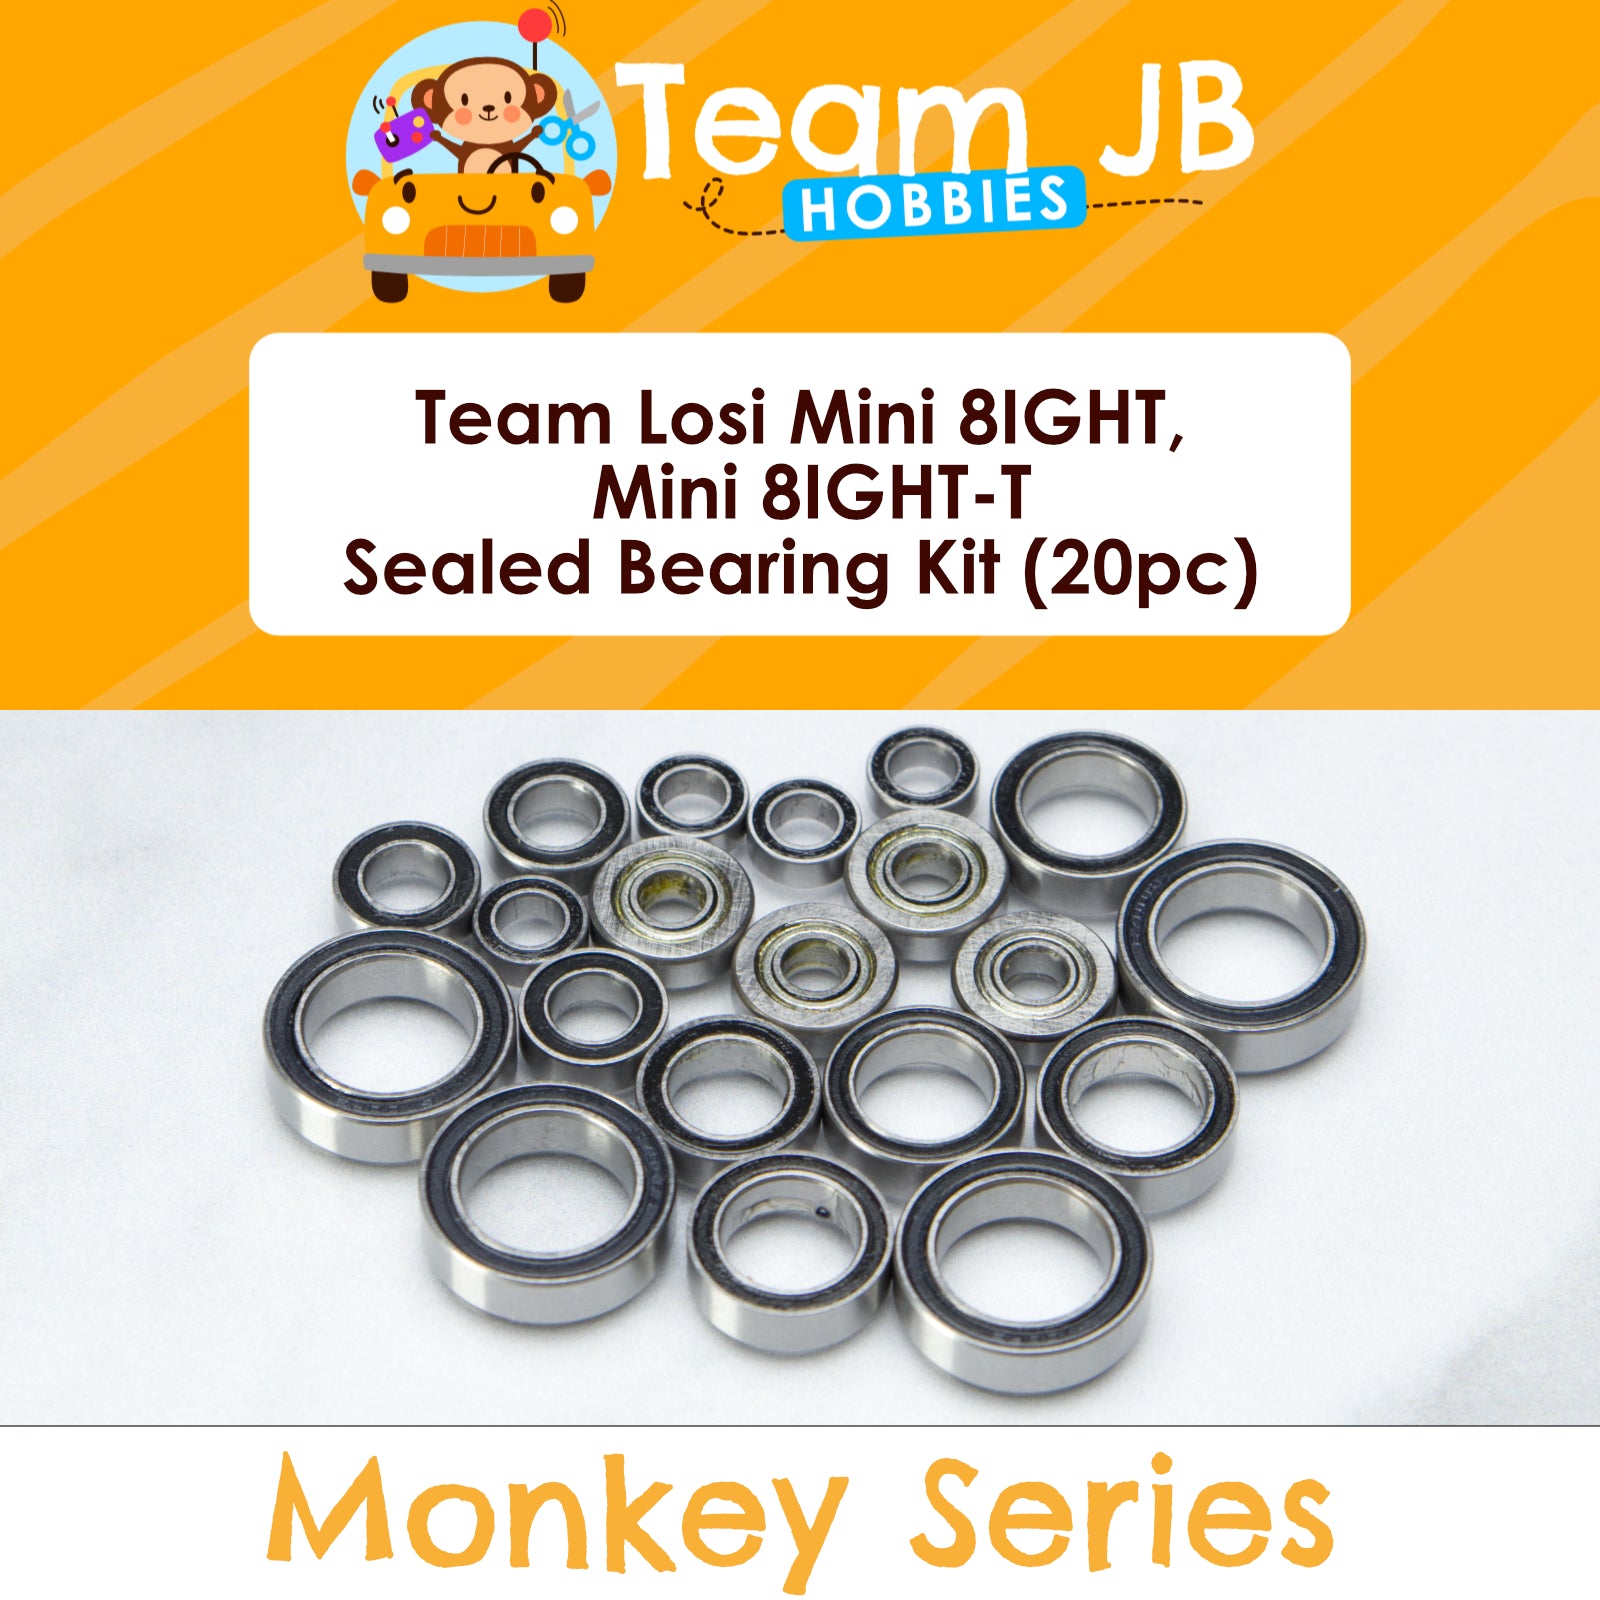 Team Losi Mini 8IGHT, Mini 8IGHT-T - Sealed Bearing Kit